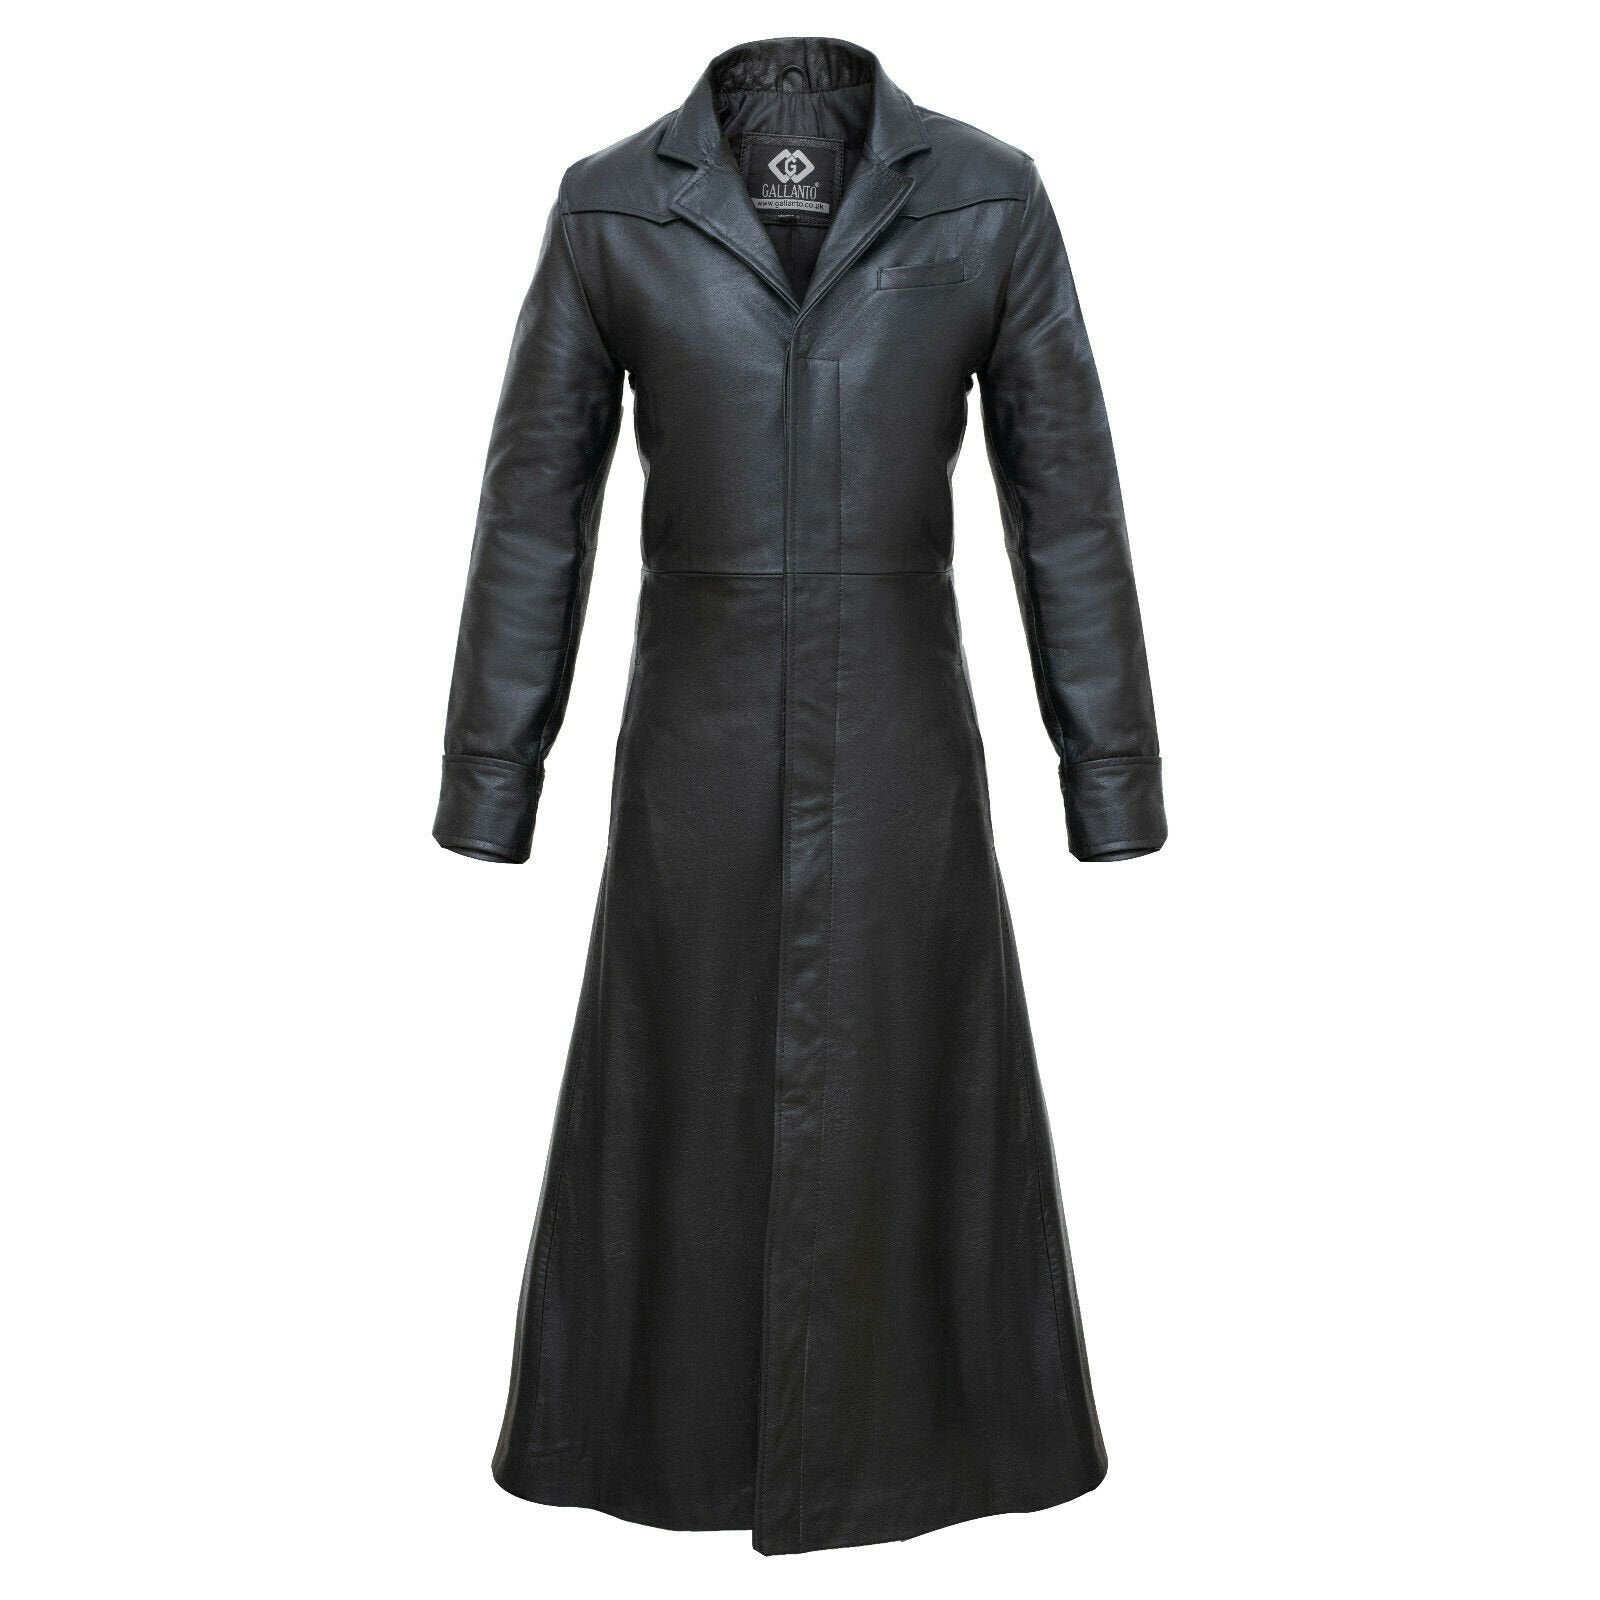 Detective Neo Matrix Style Black Gothic Style Men’s Leather Trench Lon ...